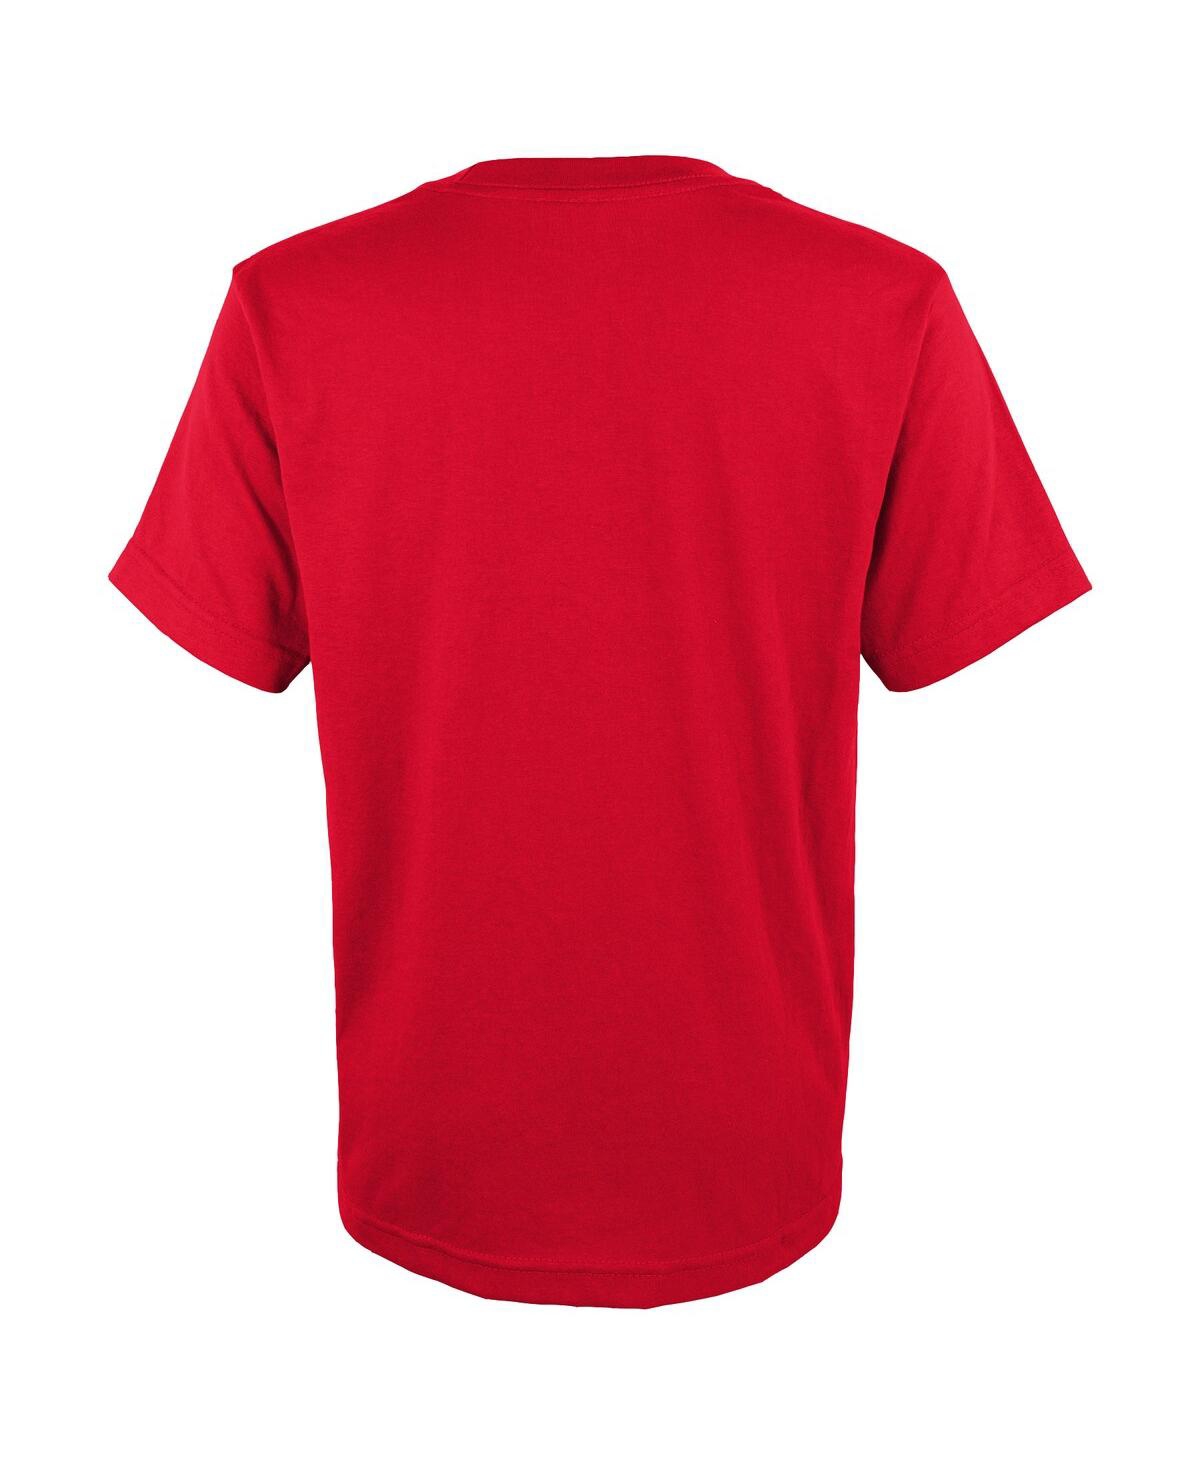 Shop Outerstuff Big Boys Red Kansas City Chiefs Super Bowl Lviii Champions Iconic Victory T-shirt